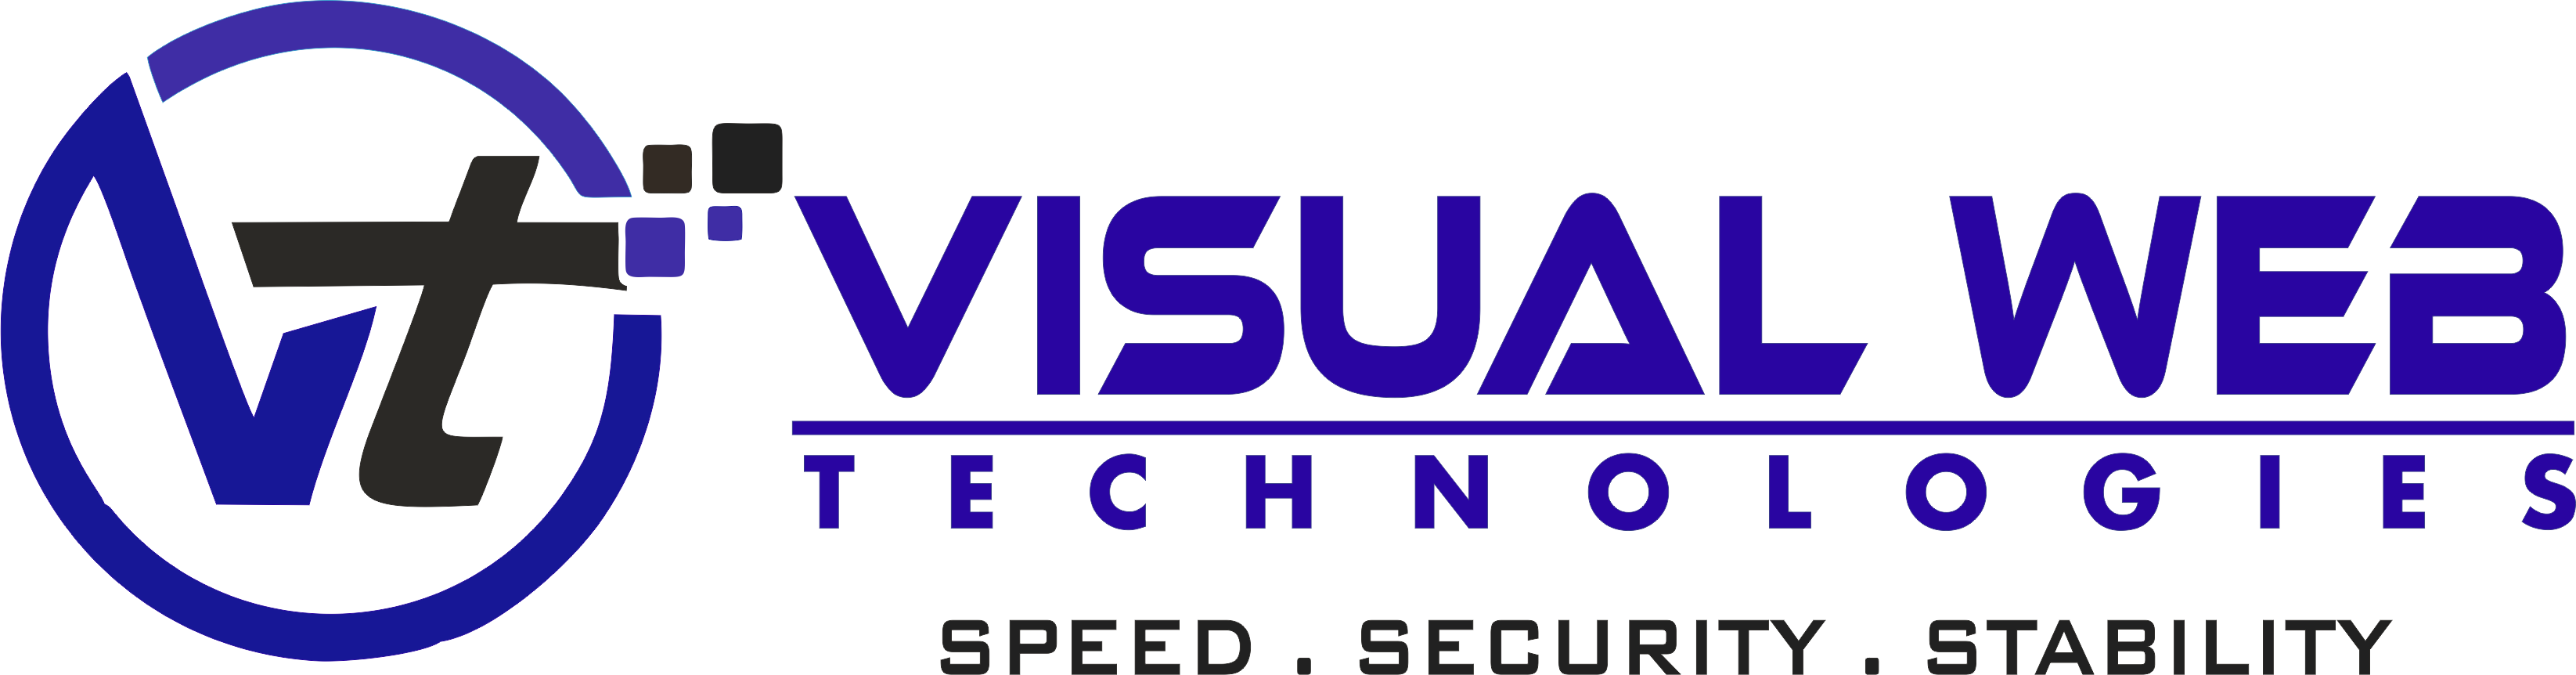 visualwebtechnologies best cheap web hosting logo